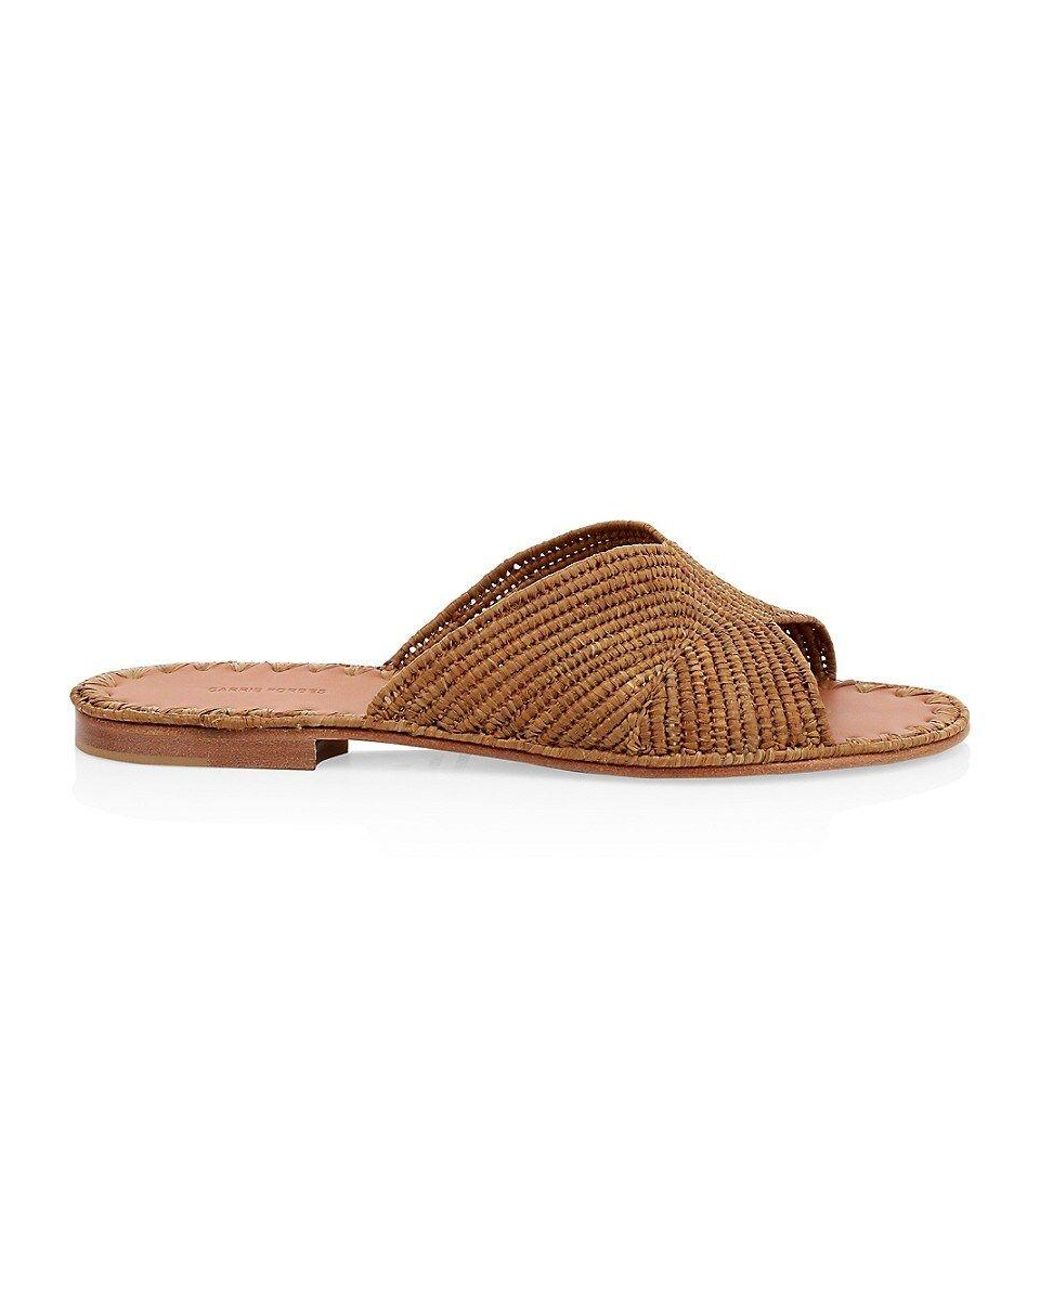 Carrie Forbes Salon Raffia Slide Sandals in Brown | Lyst